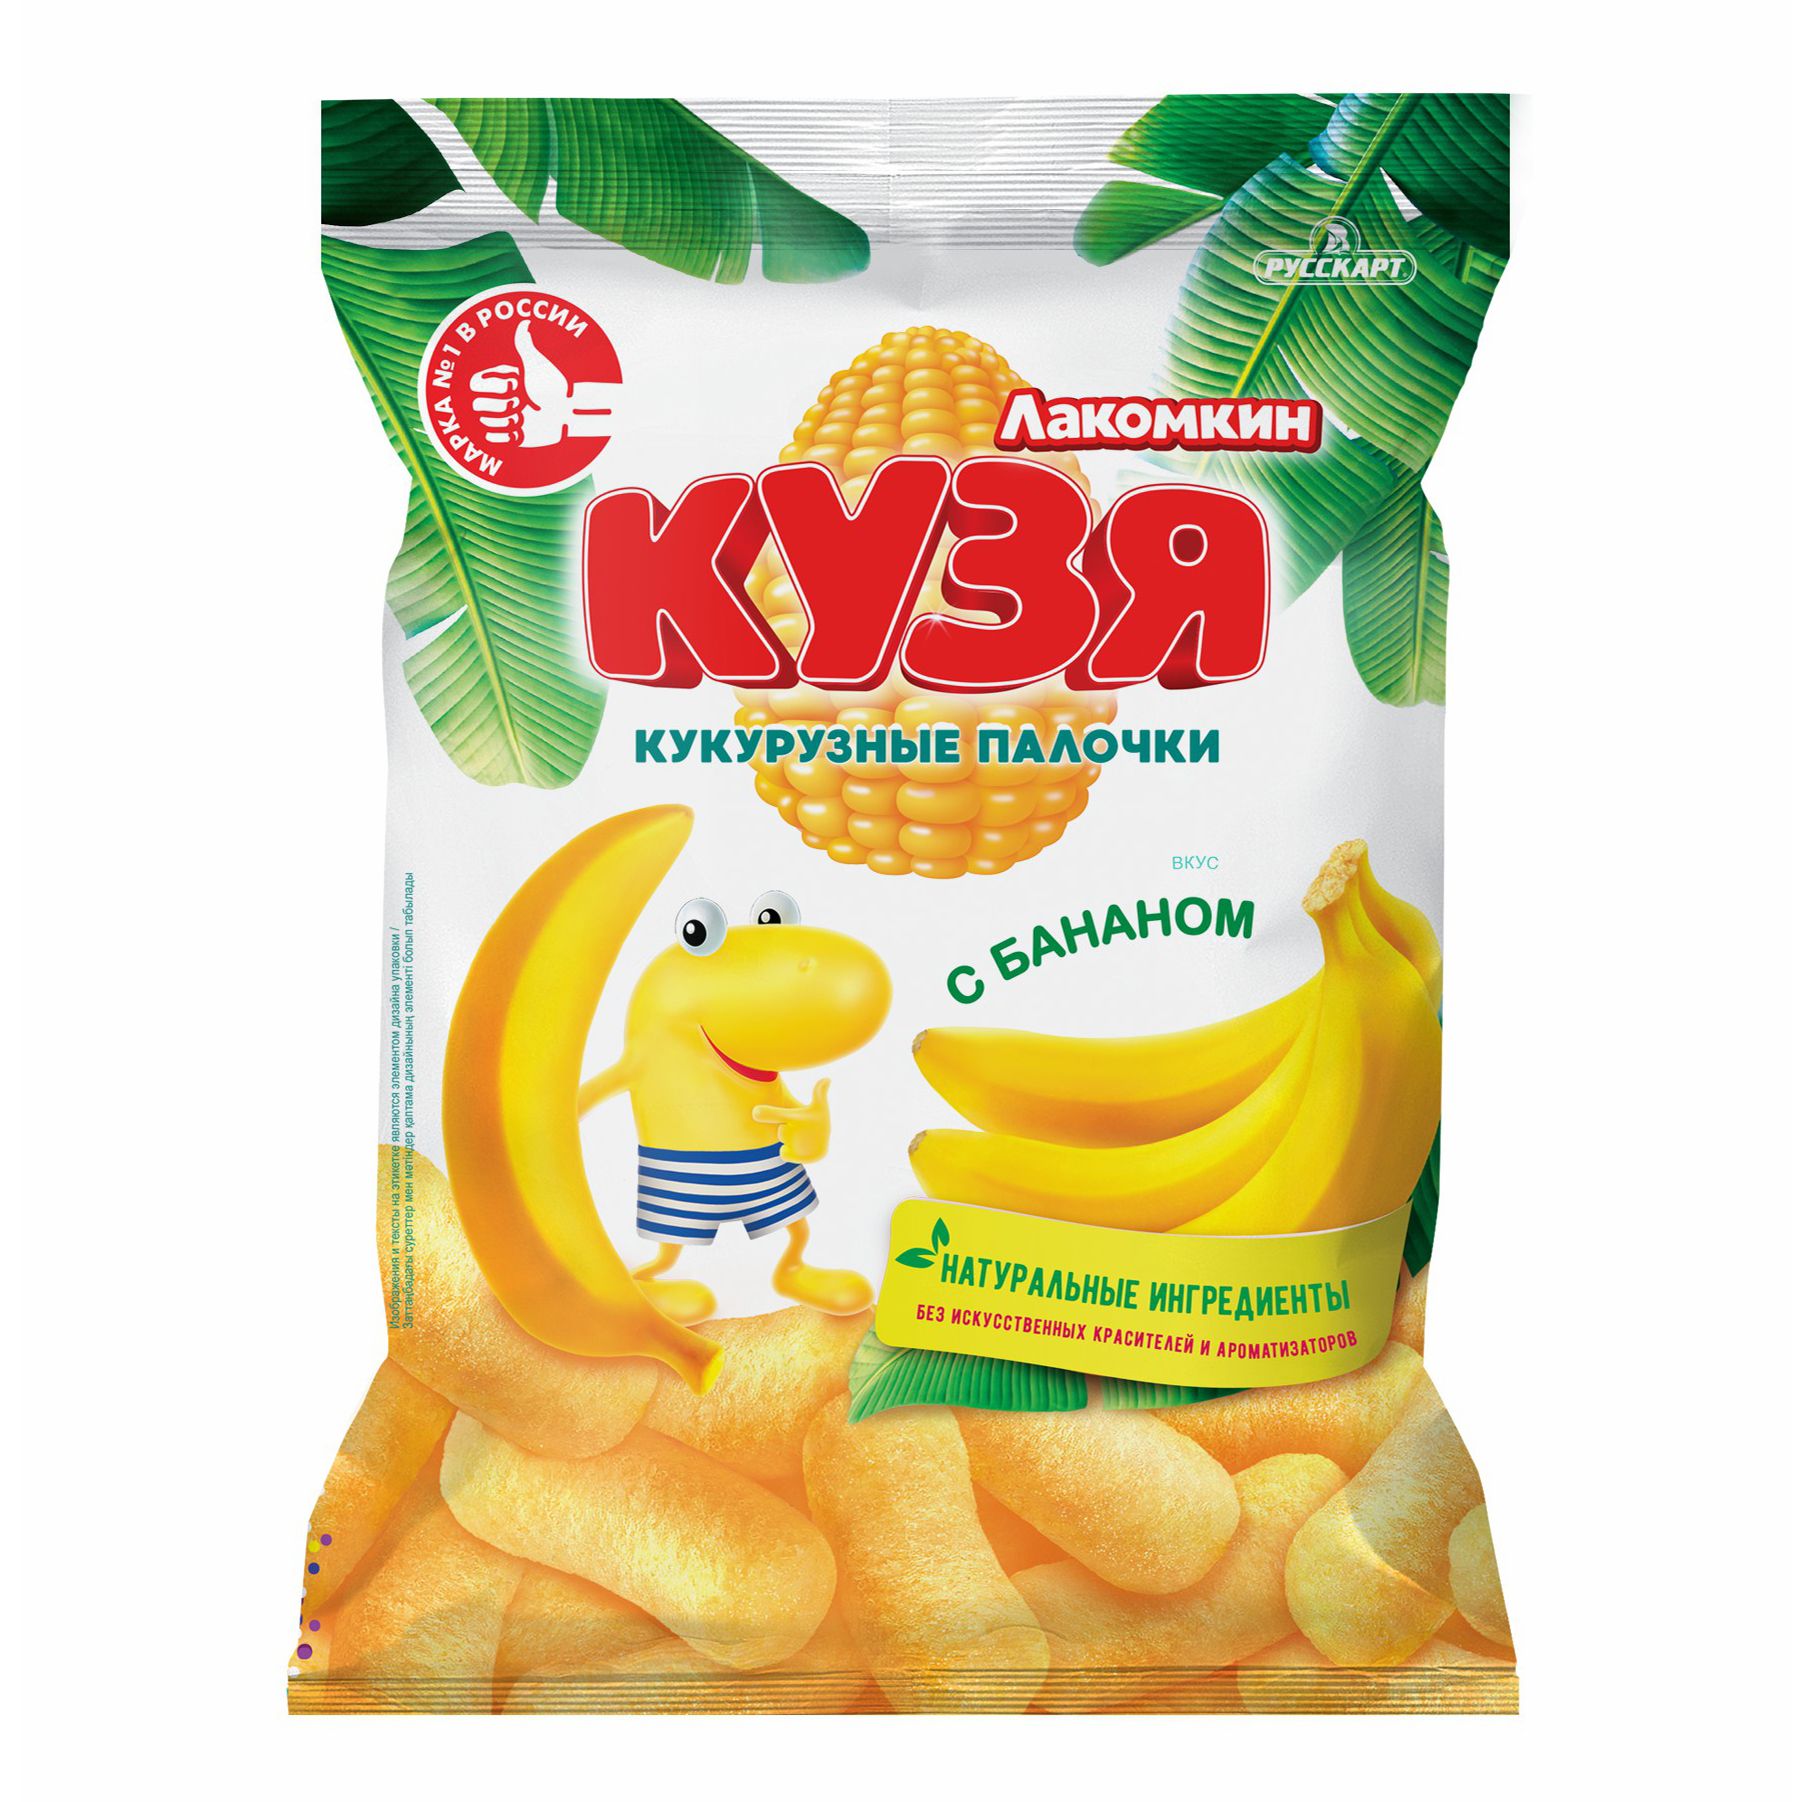 Кукурузные палочки Кузя Лакомкин банан 50 г